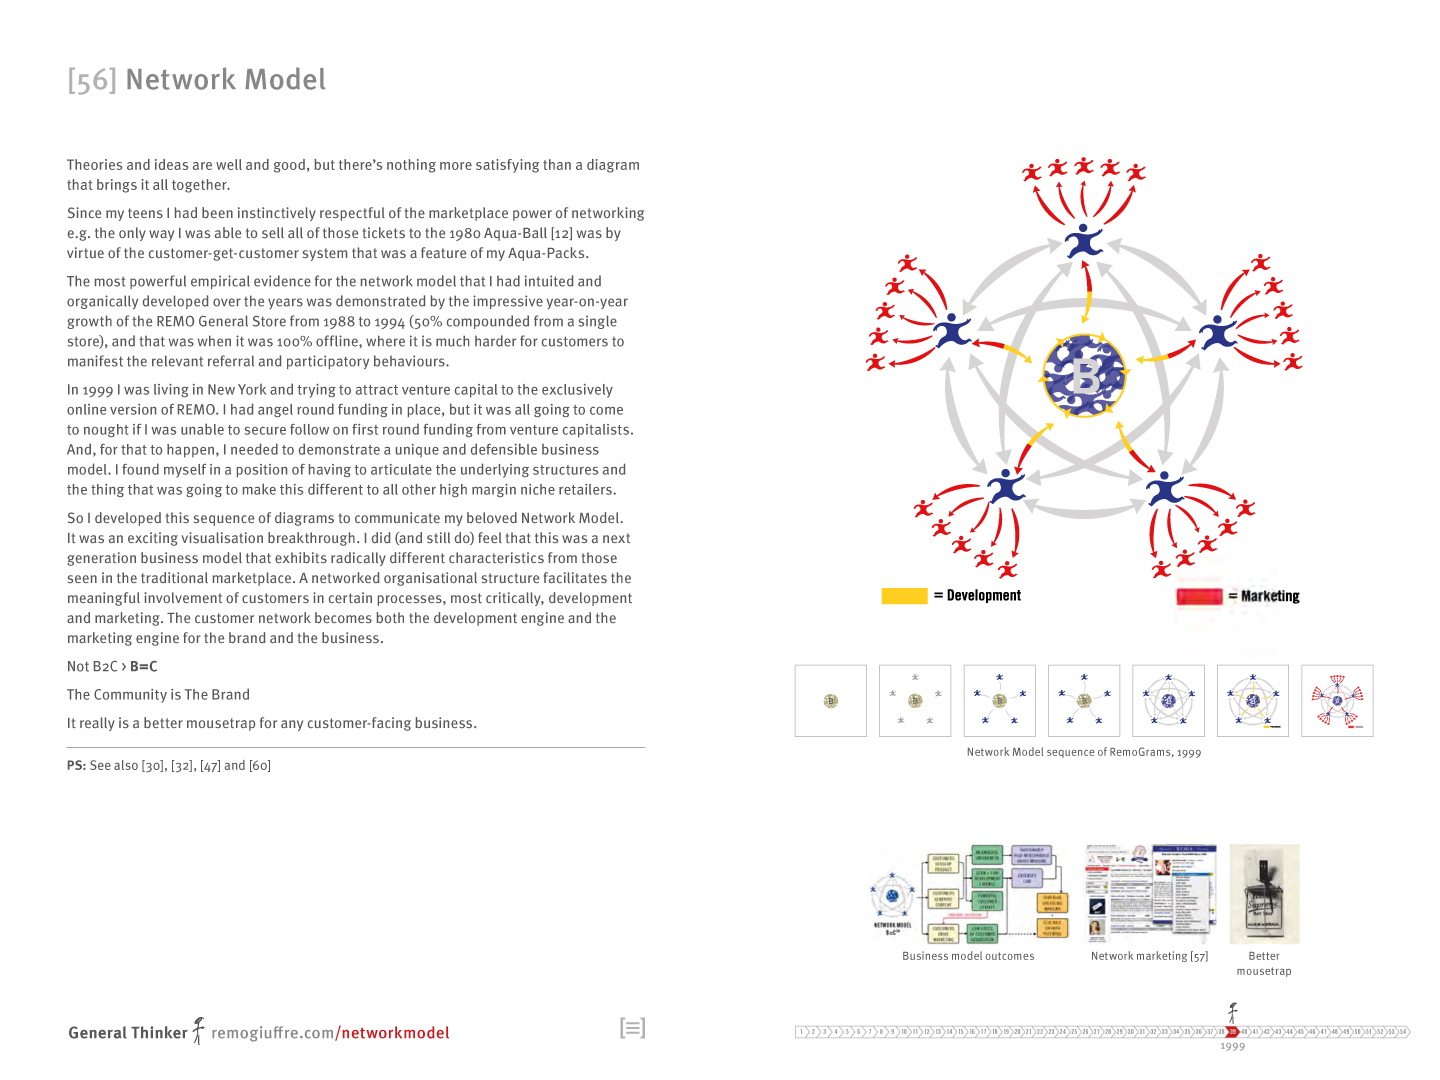 GeneralThinker_Book_NetworkModel.jpg